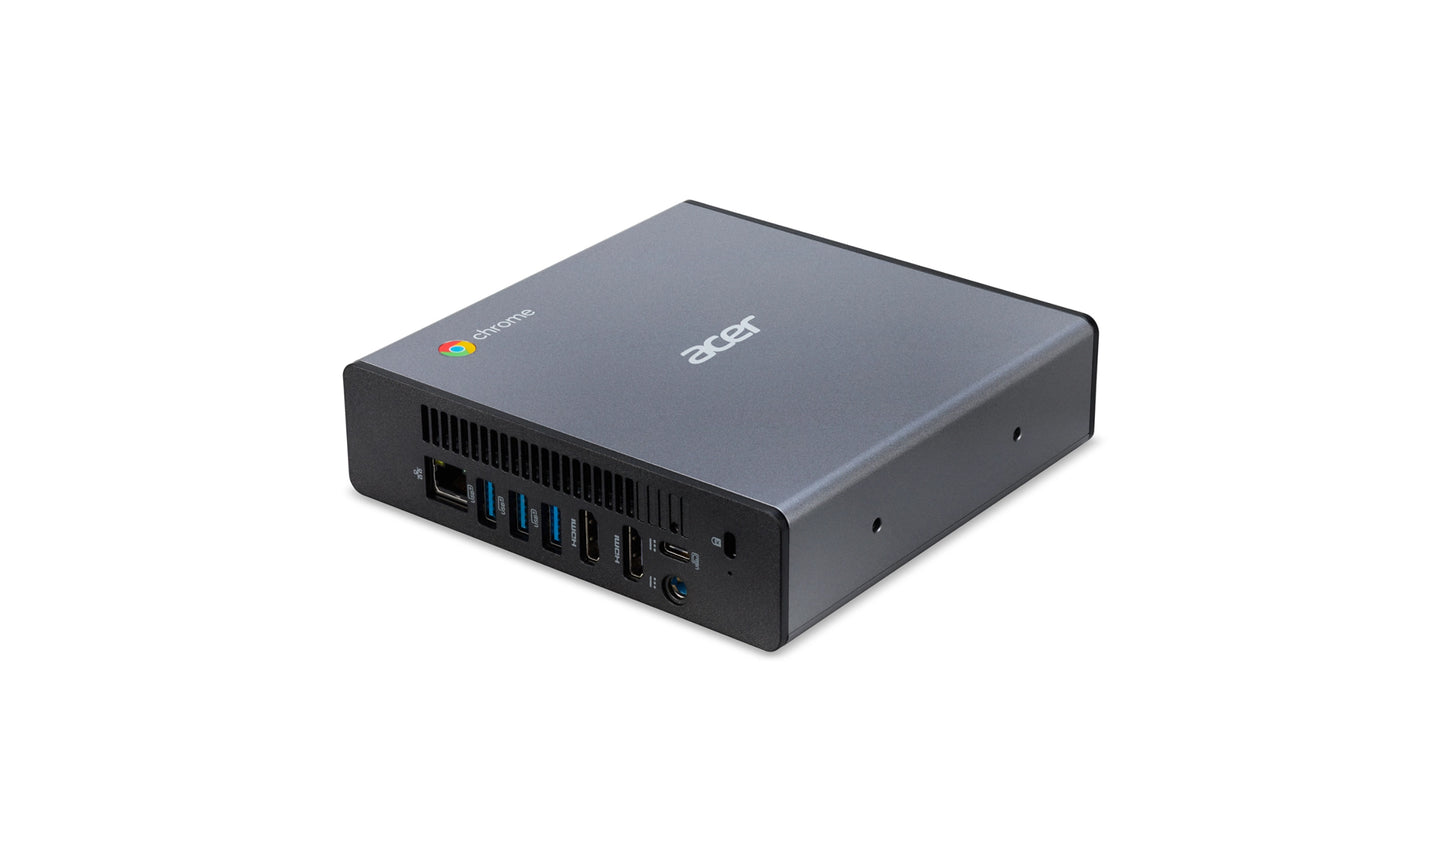 Acer Chromebox CXI4، معالج Intel® Core™ i5-10210U رباعي النواة بسرعة 1.60 جيجا هرتز، 8 جيجا بايت، DDR4 SDRAM، 256 جيجا بايت SSD. 